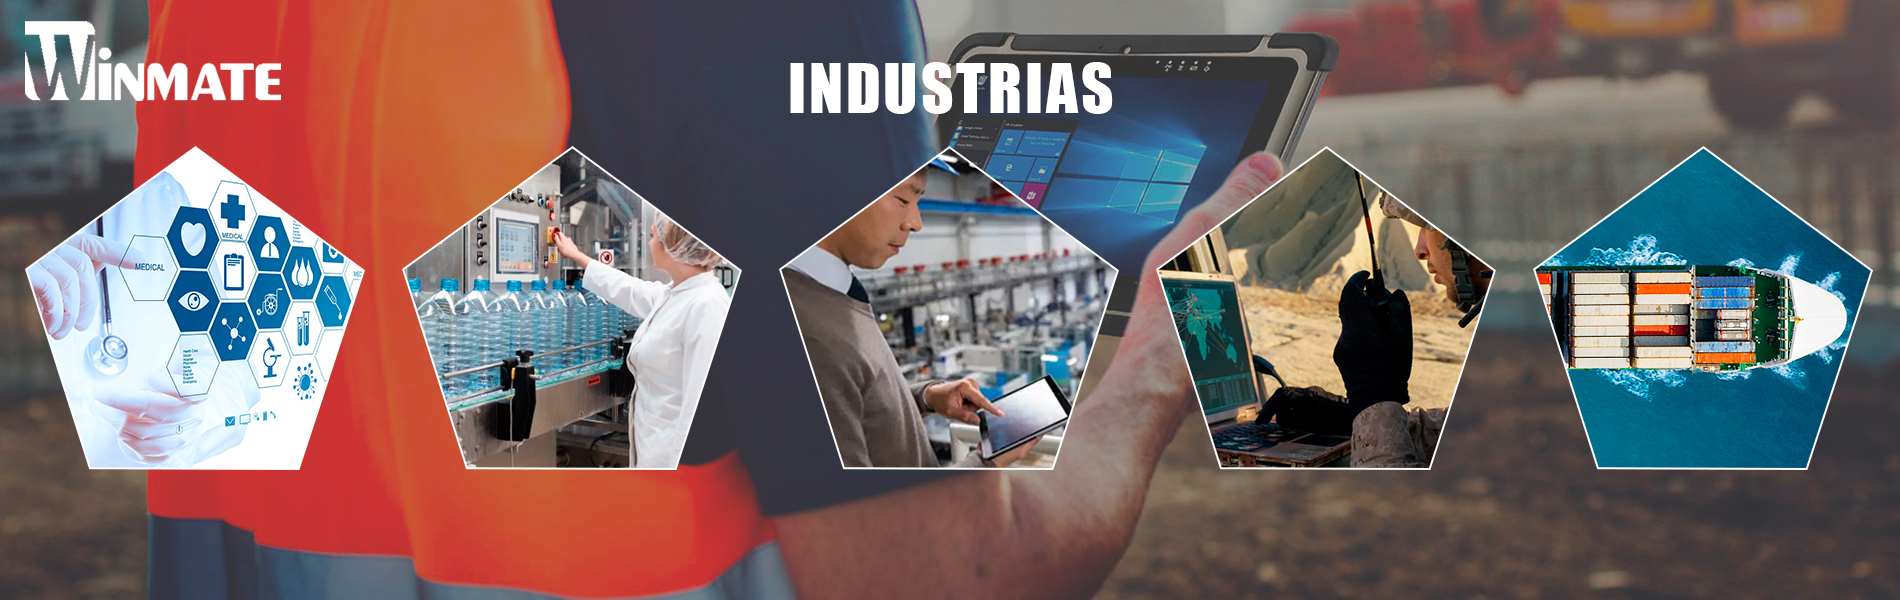 Industrias-Tablet